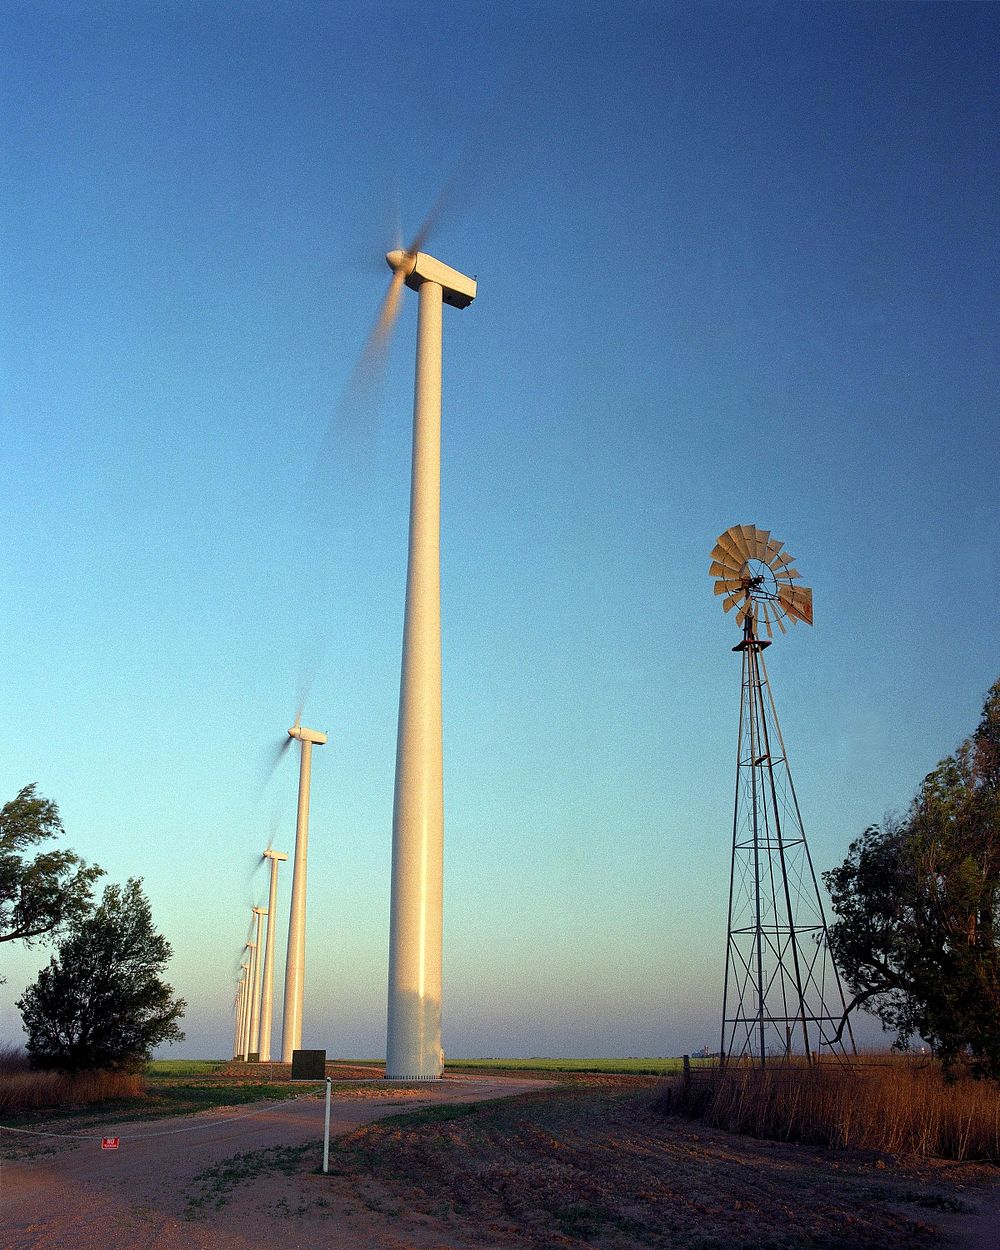 Wind farm in Kansas during sunrise. Original public domain image from Flickr